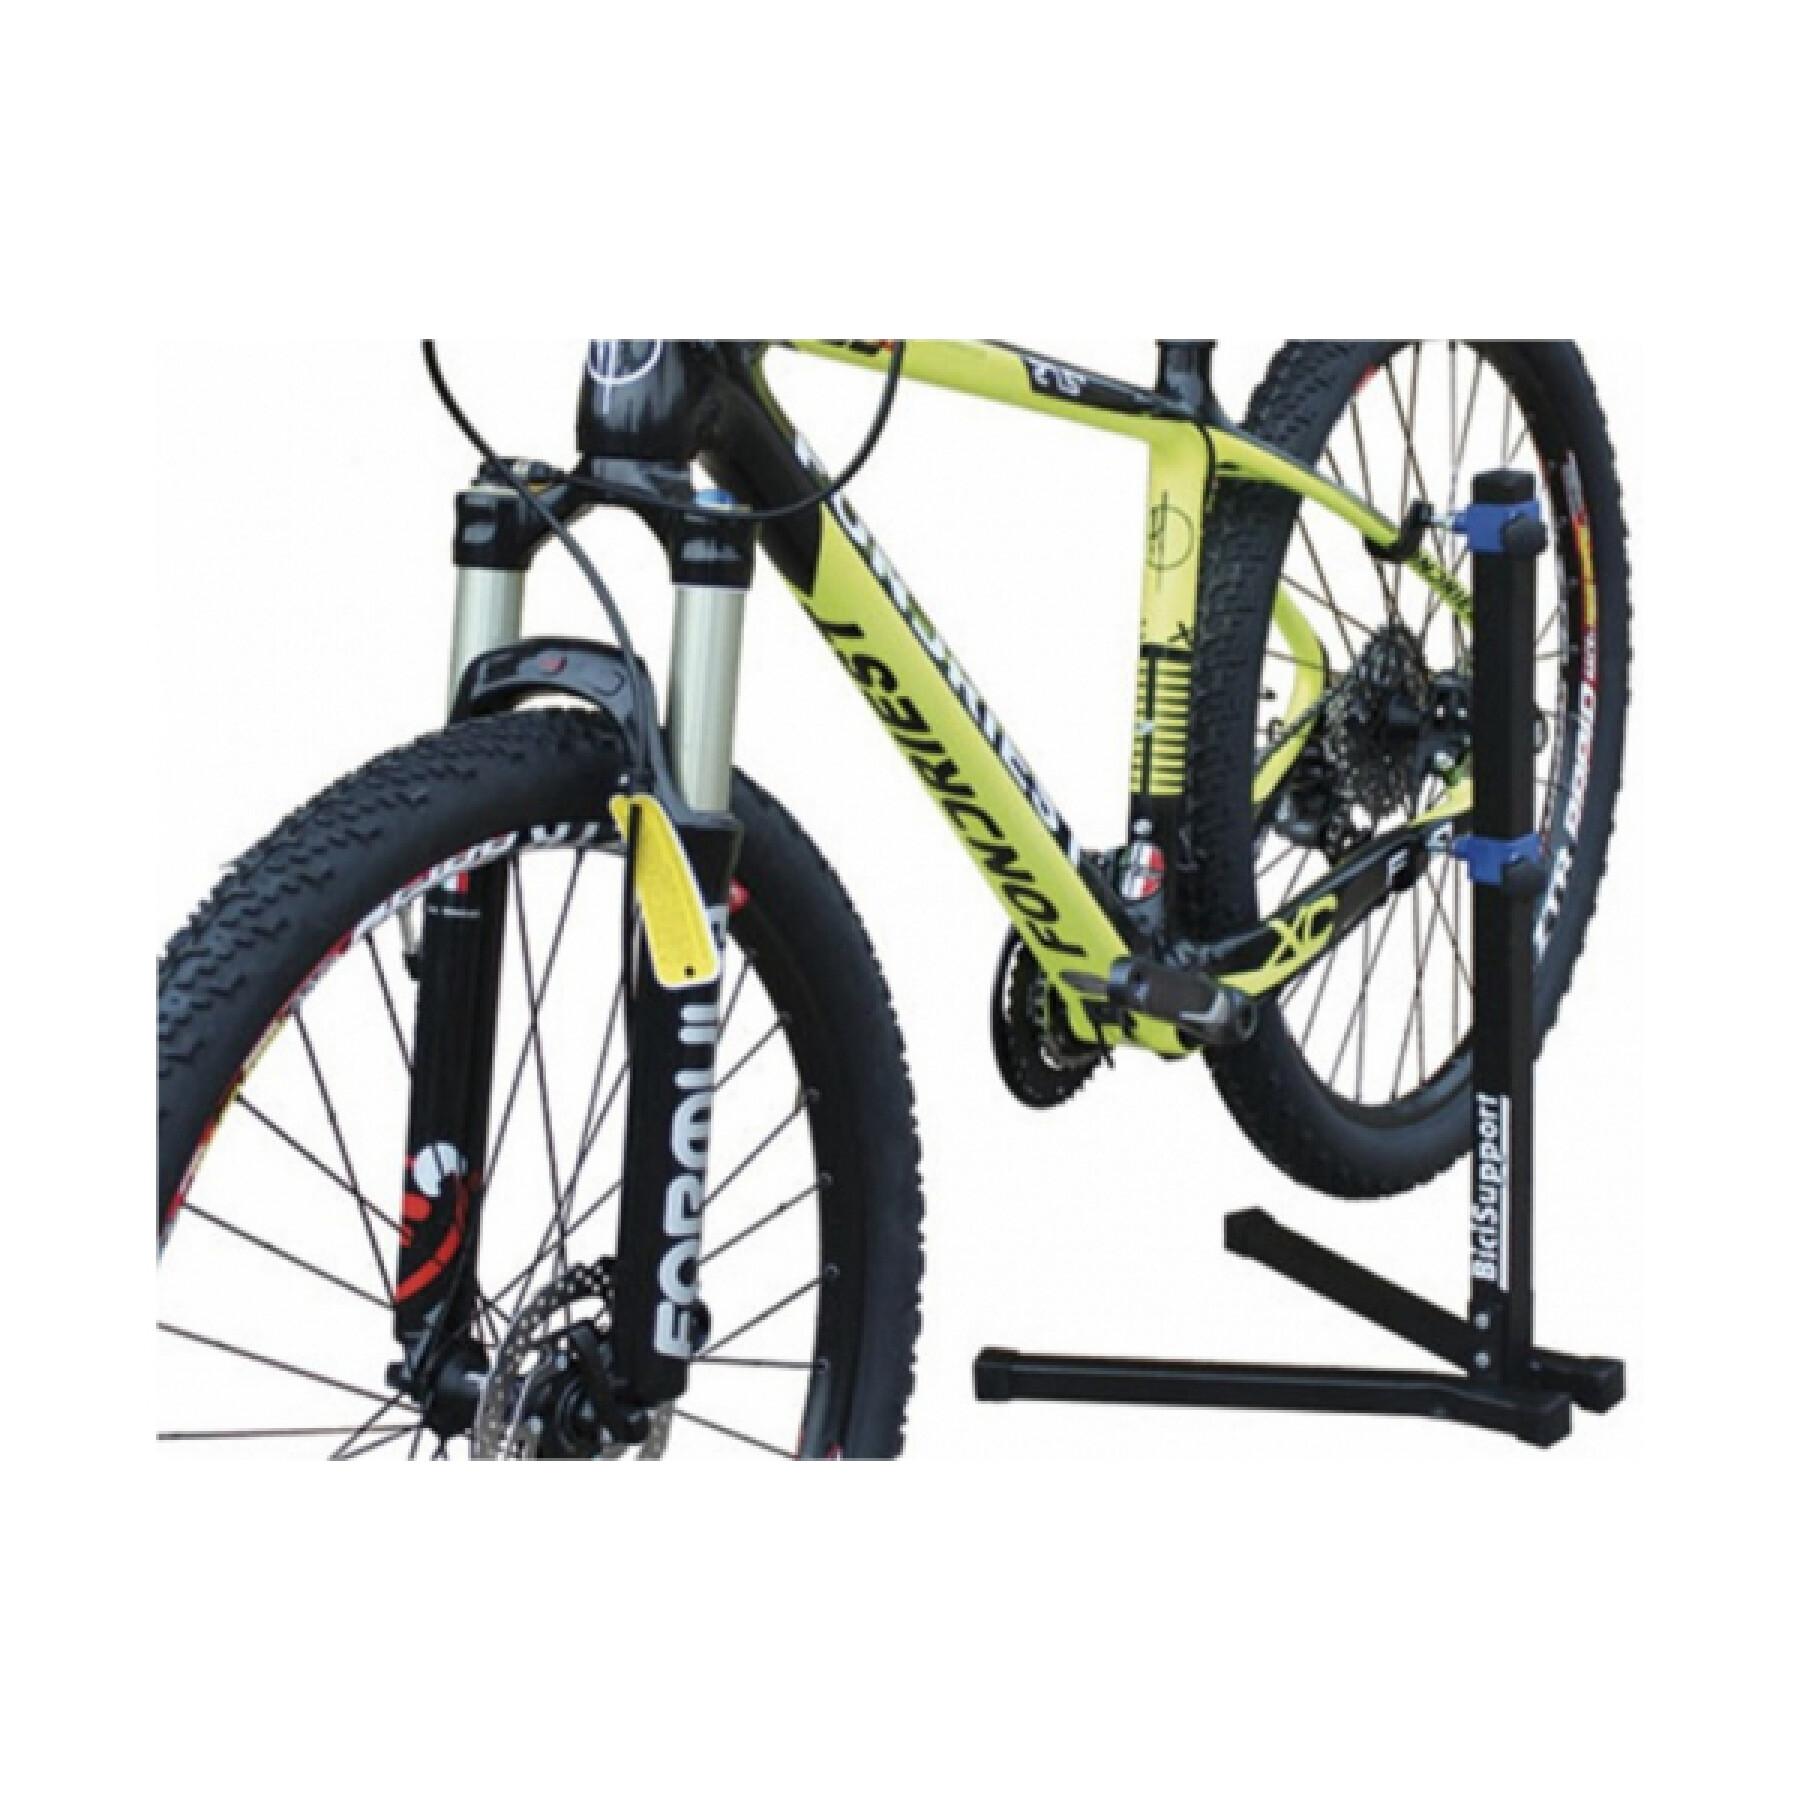 Support réparation vélo sol Bicisupport LordGun online bike store